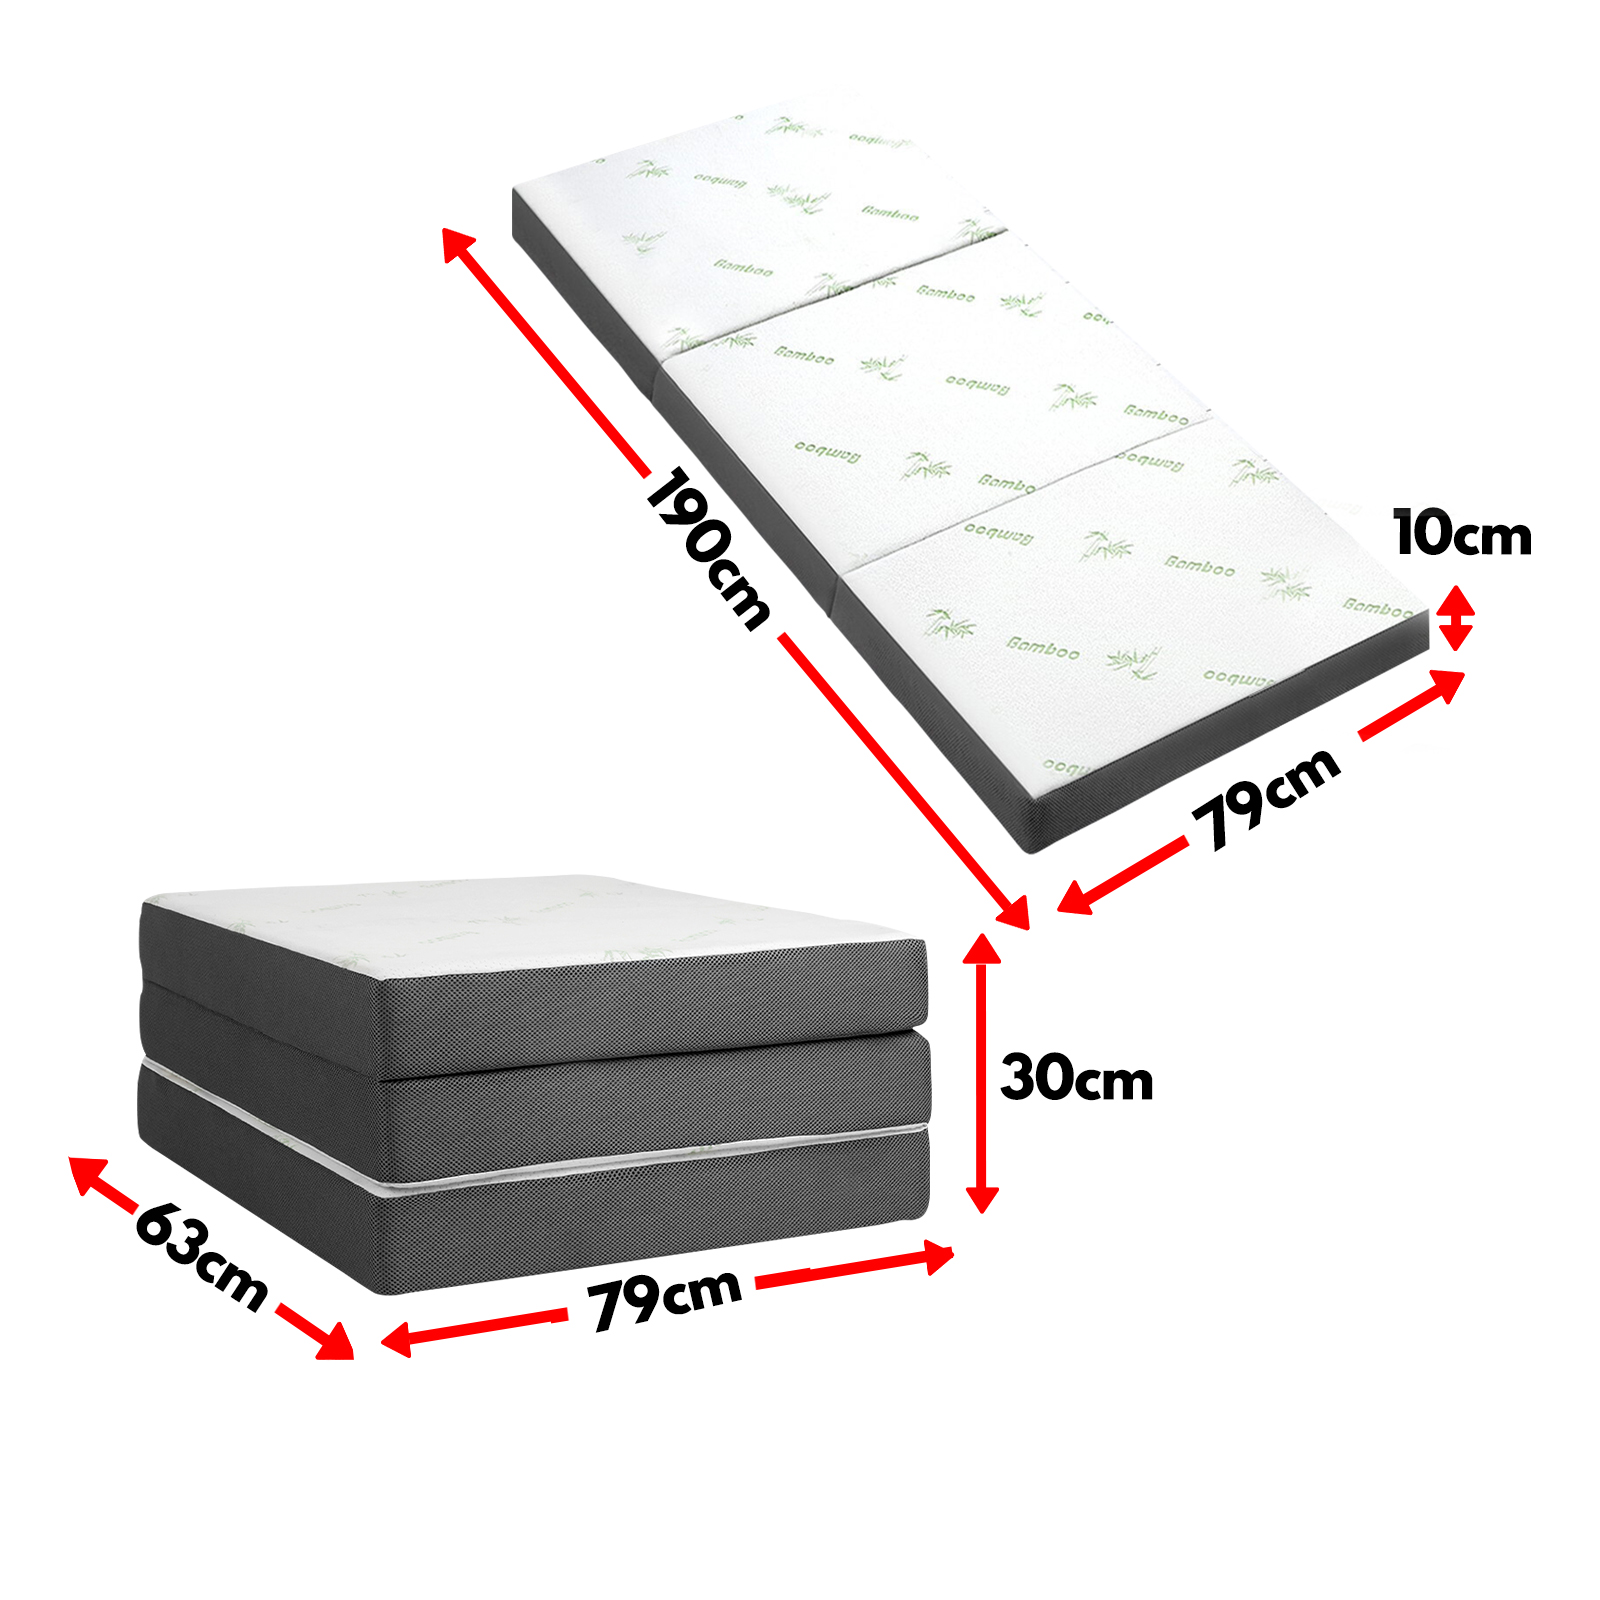  Folding Foam Portable Mattress Bed Bamboo Fabric Medium Firm - White & Grey